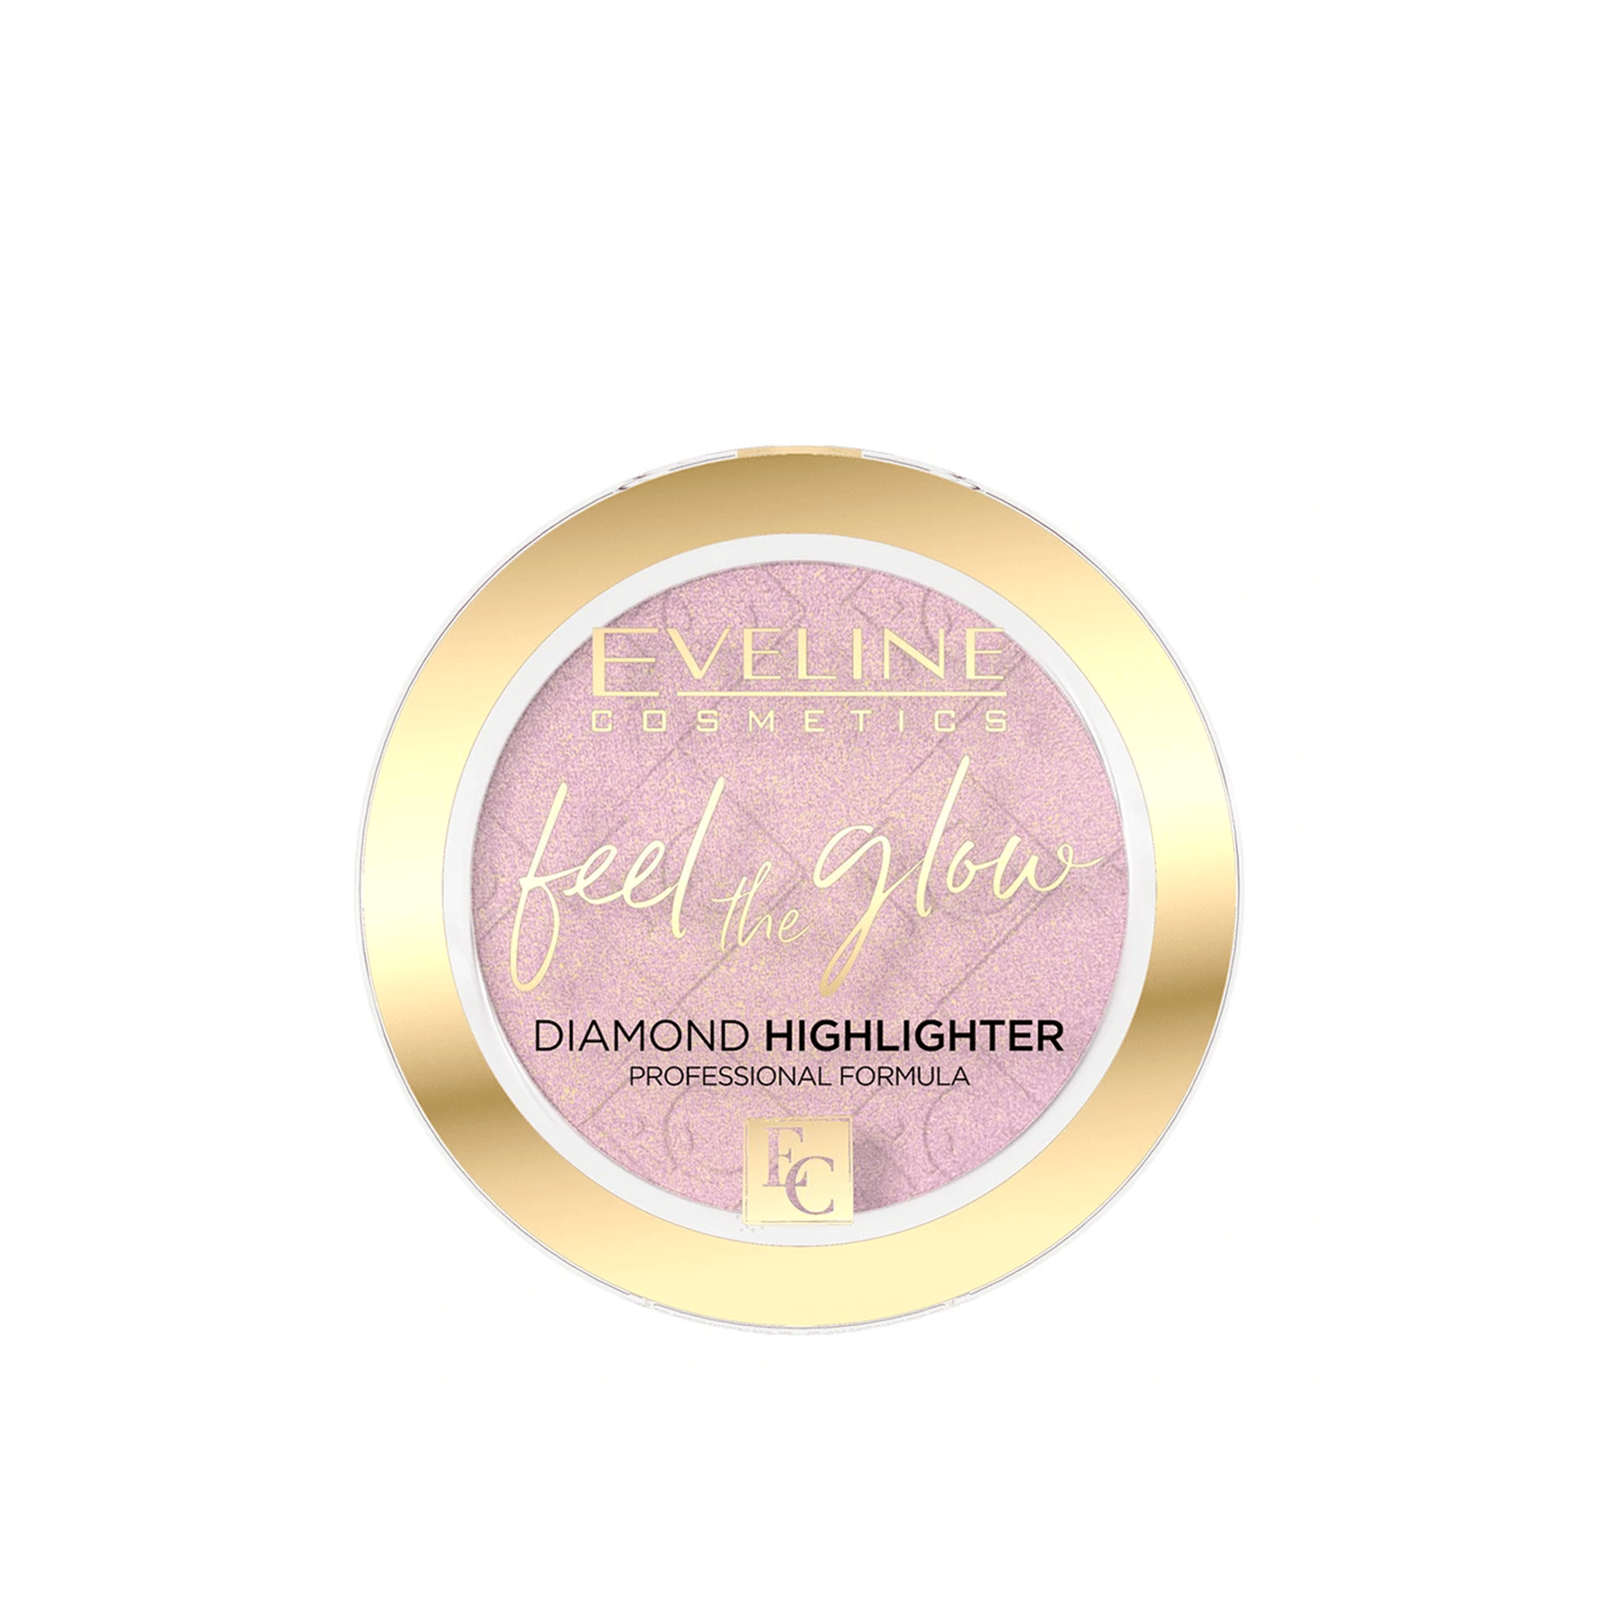 Eveline Cosmetics Feel The Glow Diamond Highlighter 03 Rose Gold 4.2g (0.14)